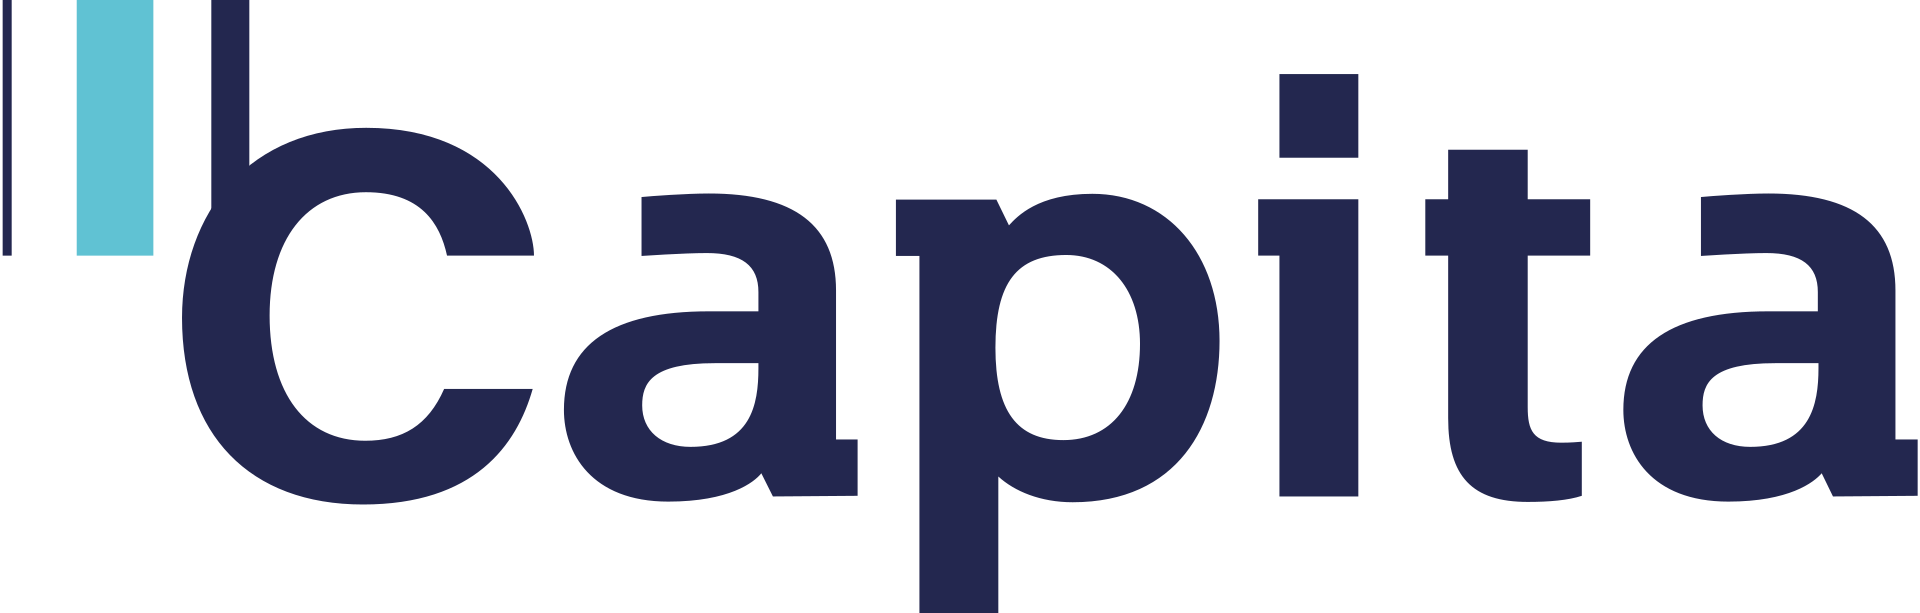 Capita Brand Logo